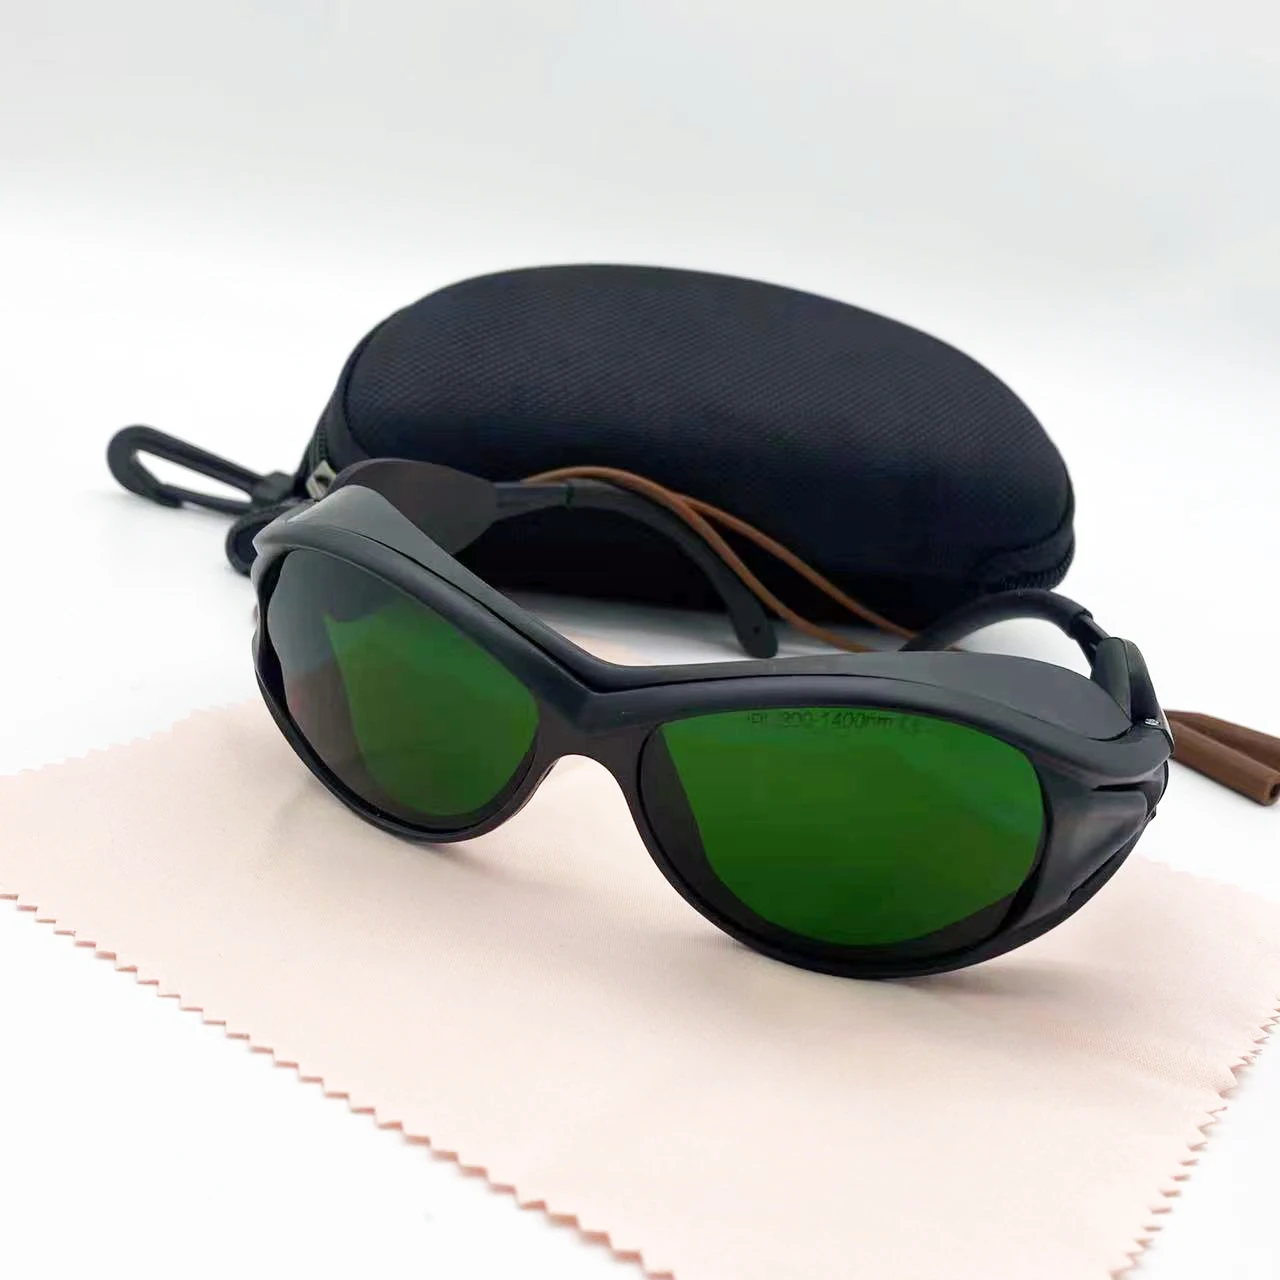 Tanio IPL okulary ochronne dla IPL 200-1400nm laserowe sklep